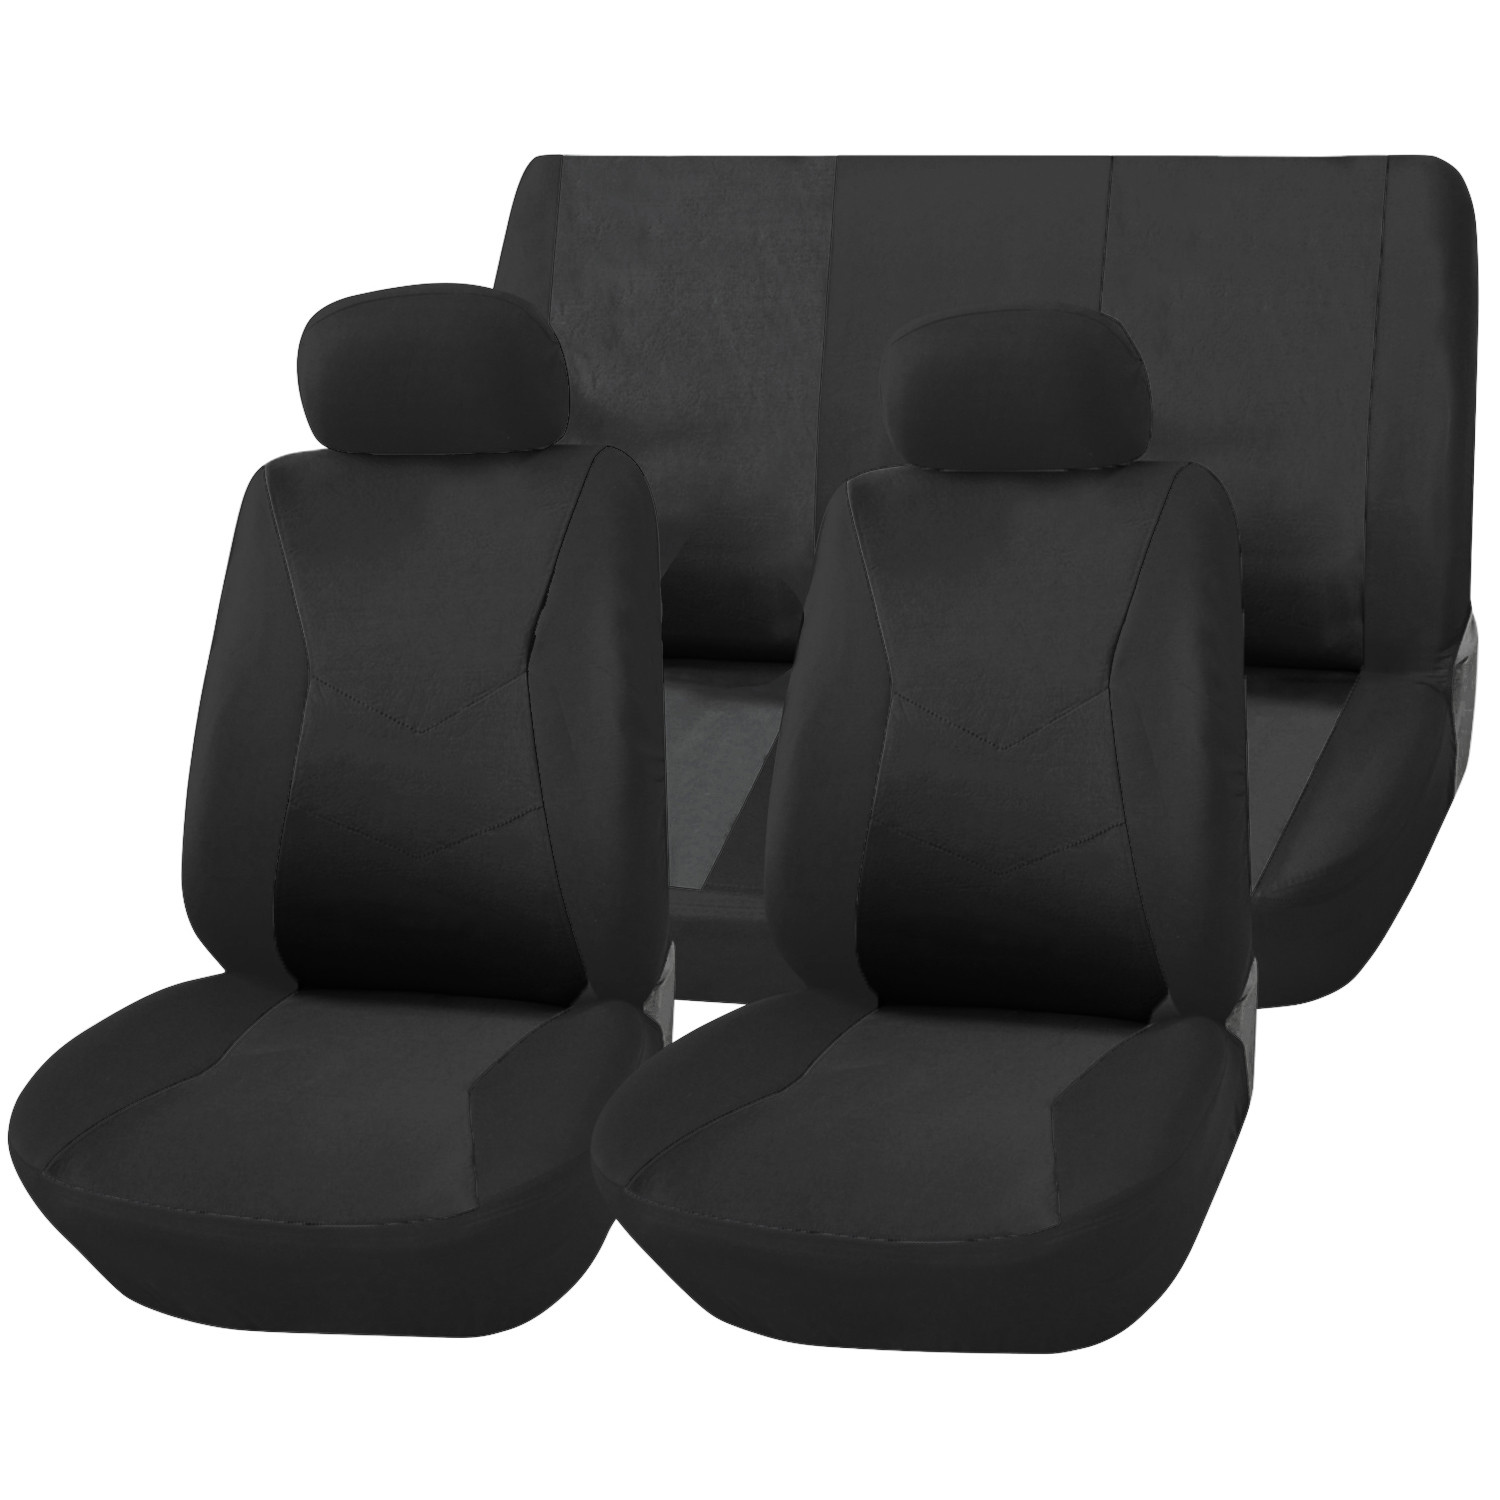 Black Car Seat Covers Full Set Image